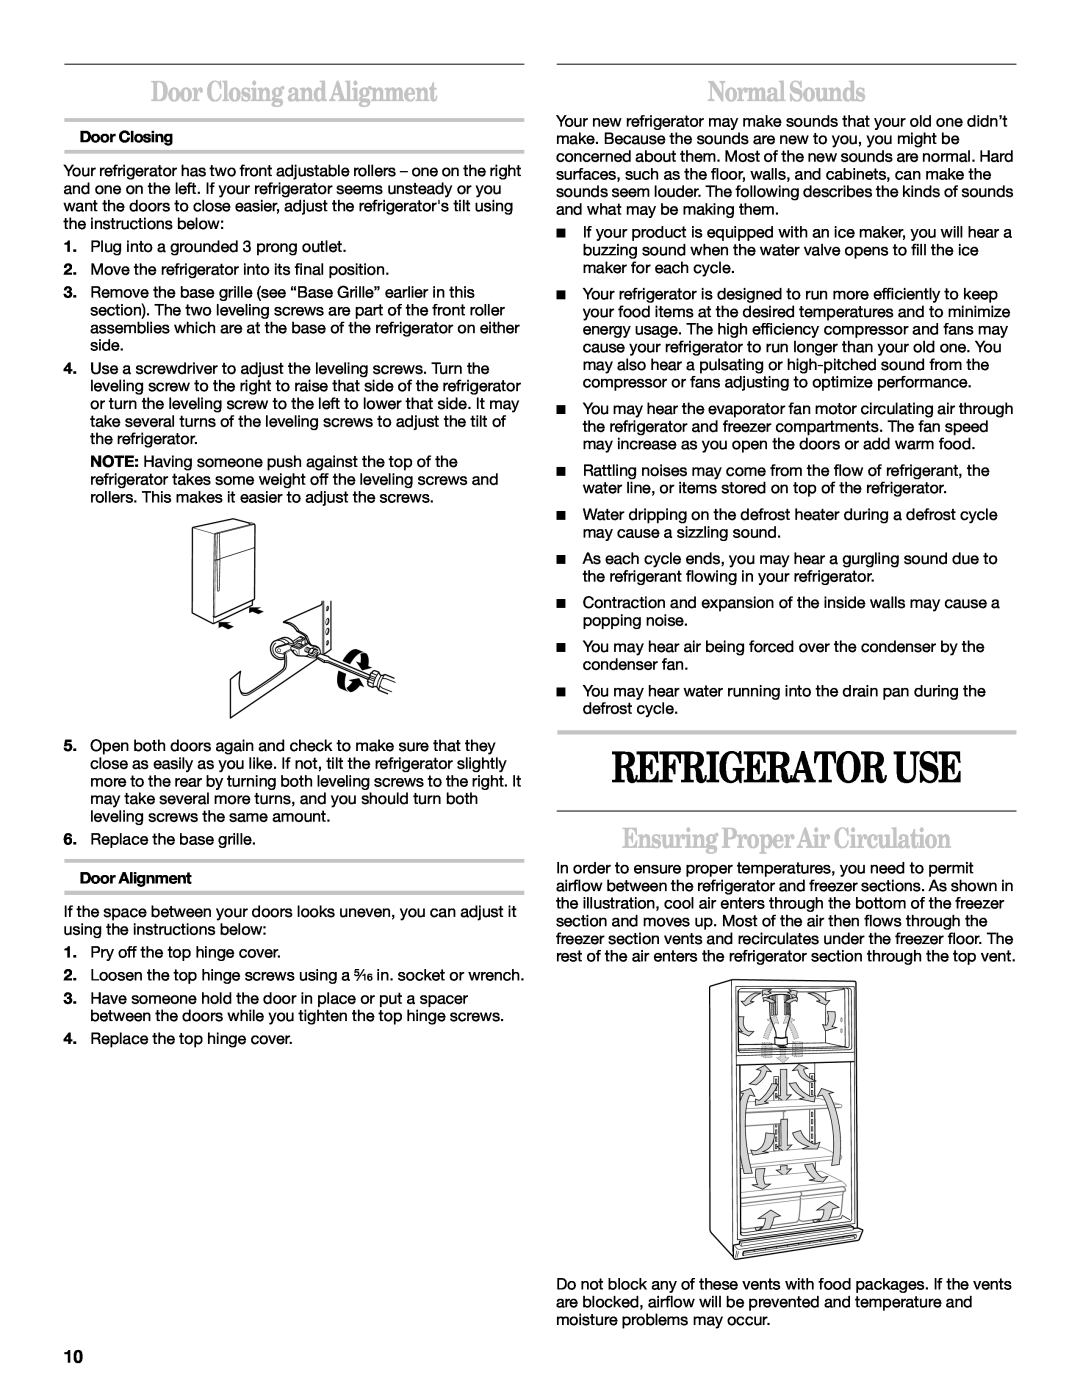 Whirlpool 2218585 manual Refrigerator Use, Door Closing andAlignment, Normal Sounds, Ensuring ProperAir Circulation 